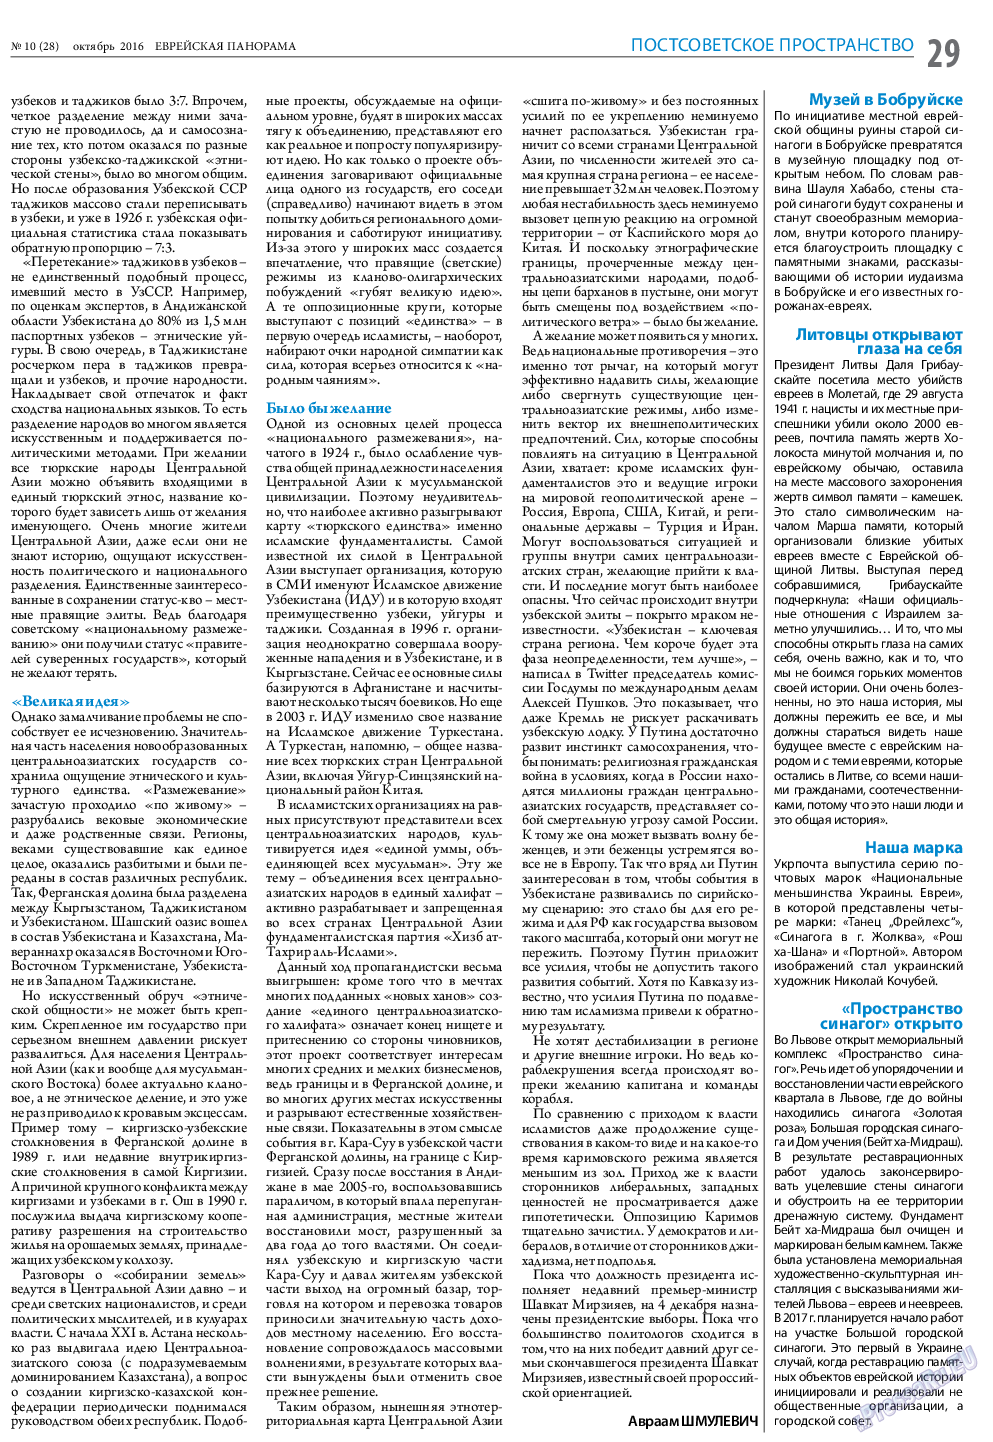 Еврейская панорама, газета. 2016 №10 стр.29